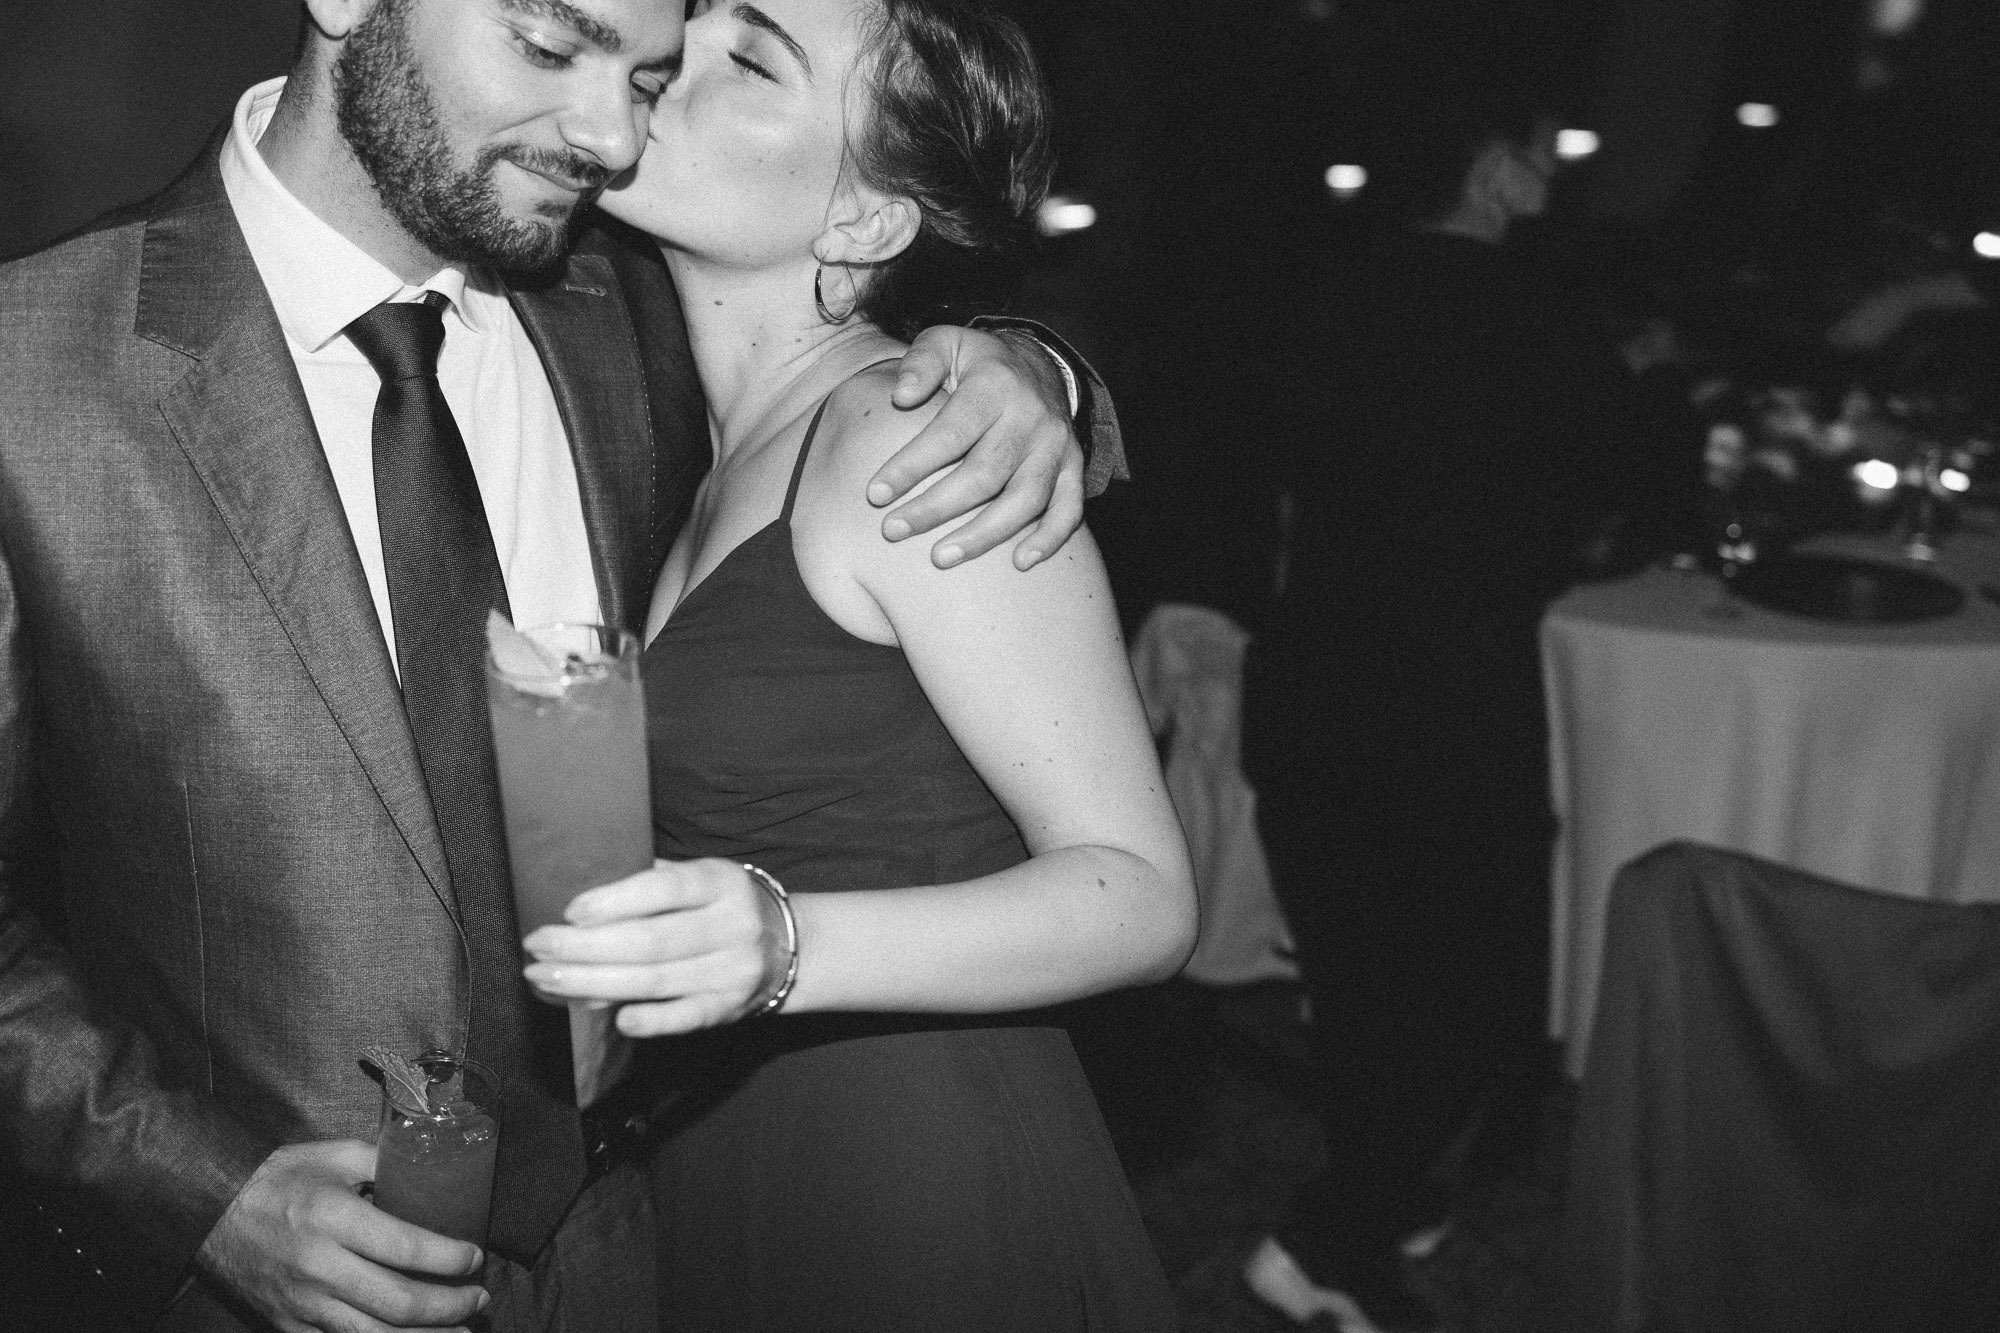 woman kisses man on cheek during wedding reception at ironlight wedding venue in lake oswego, oregon